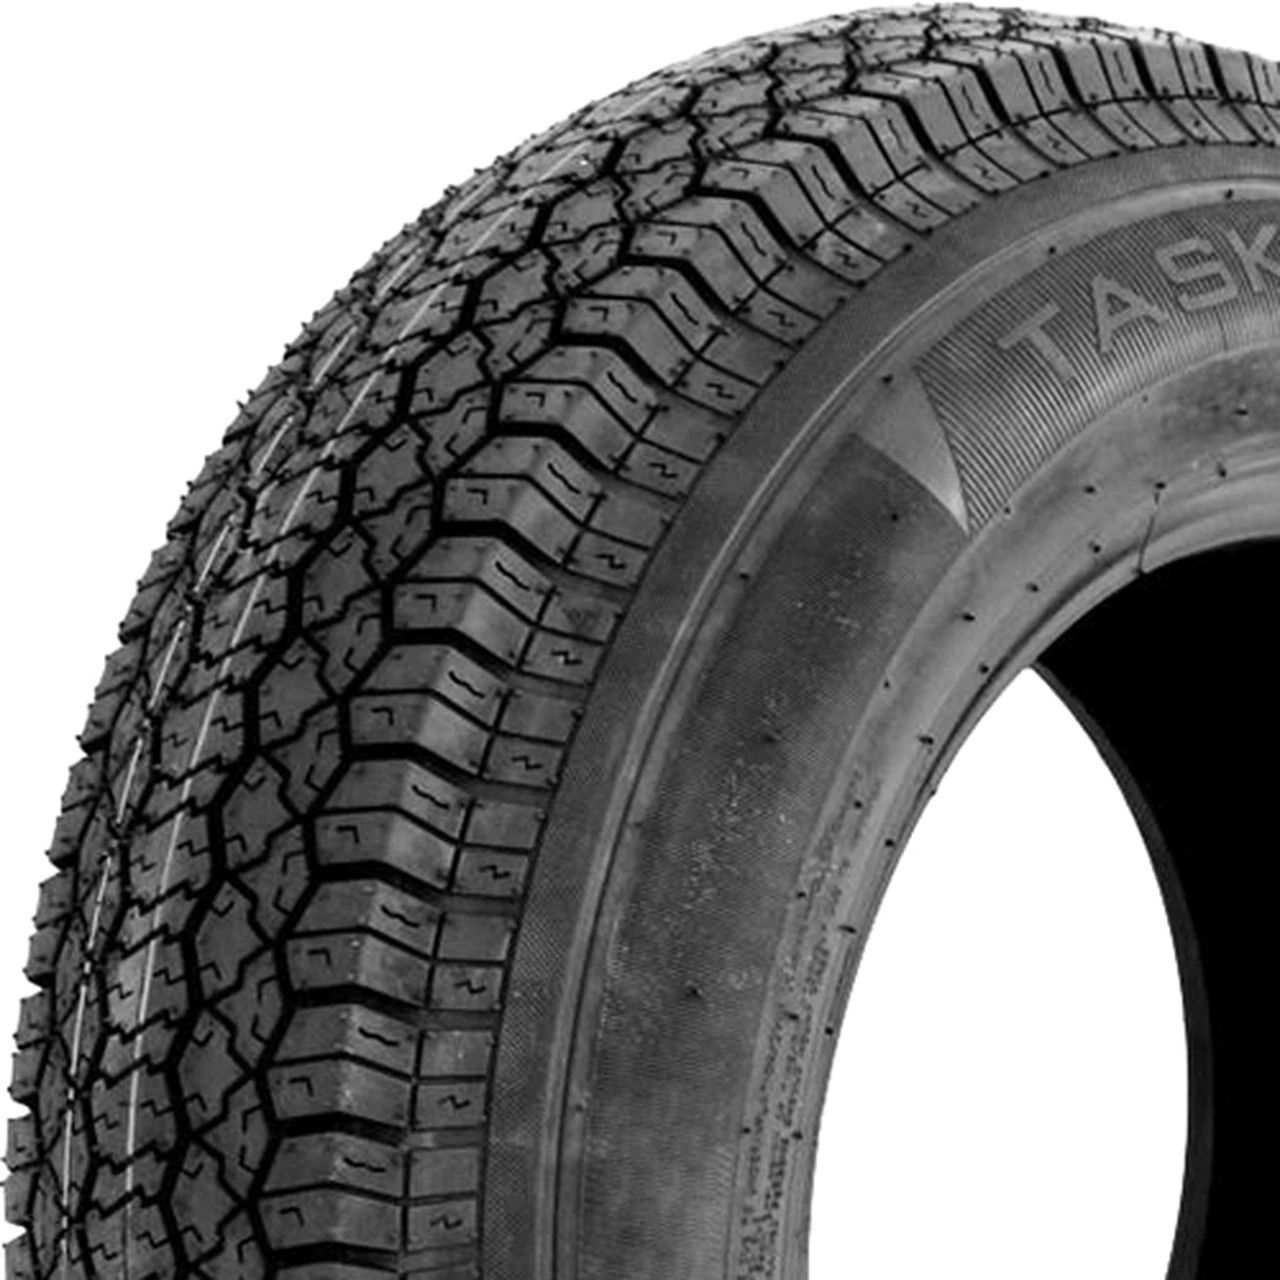 Trailer tire 15" sale